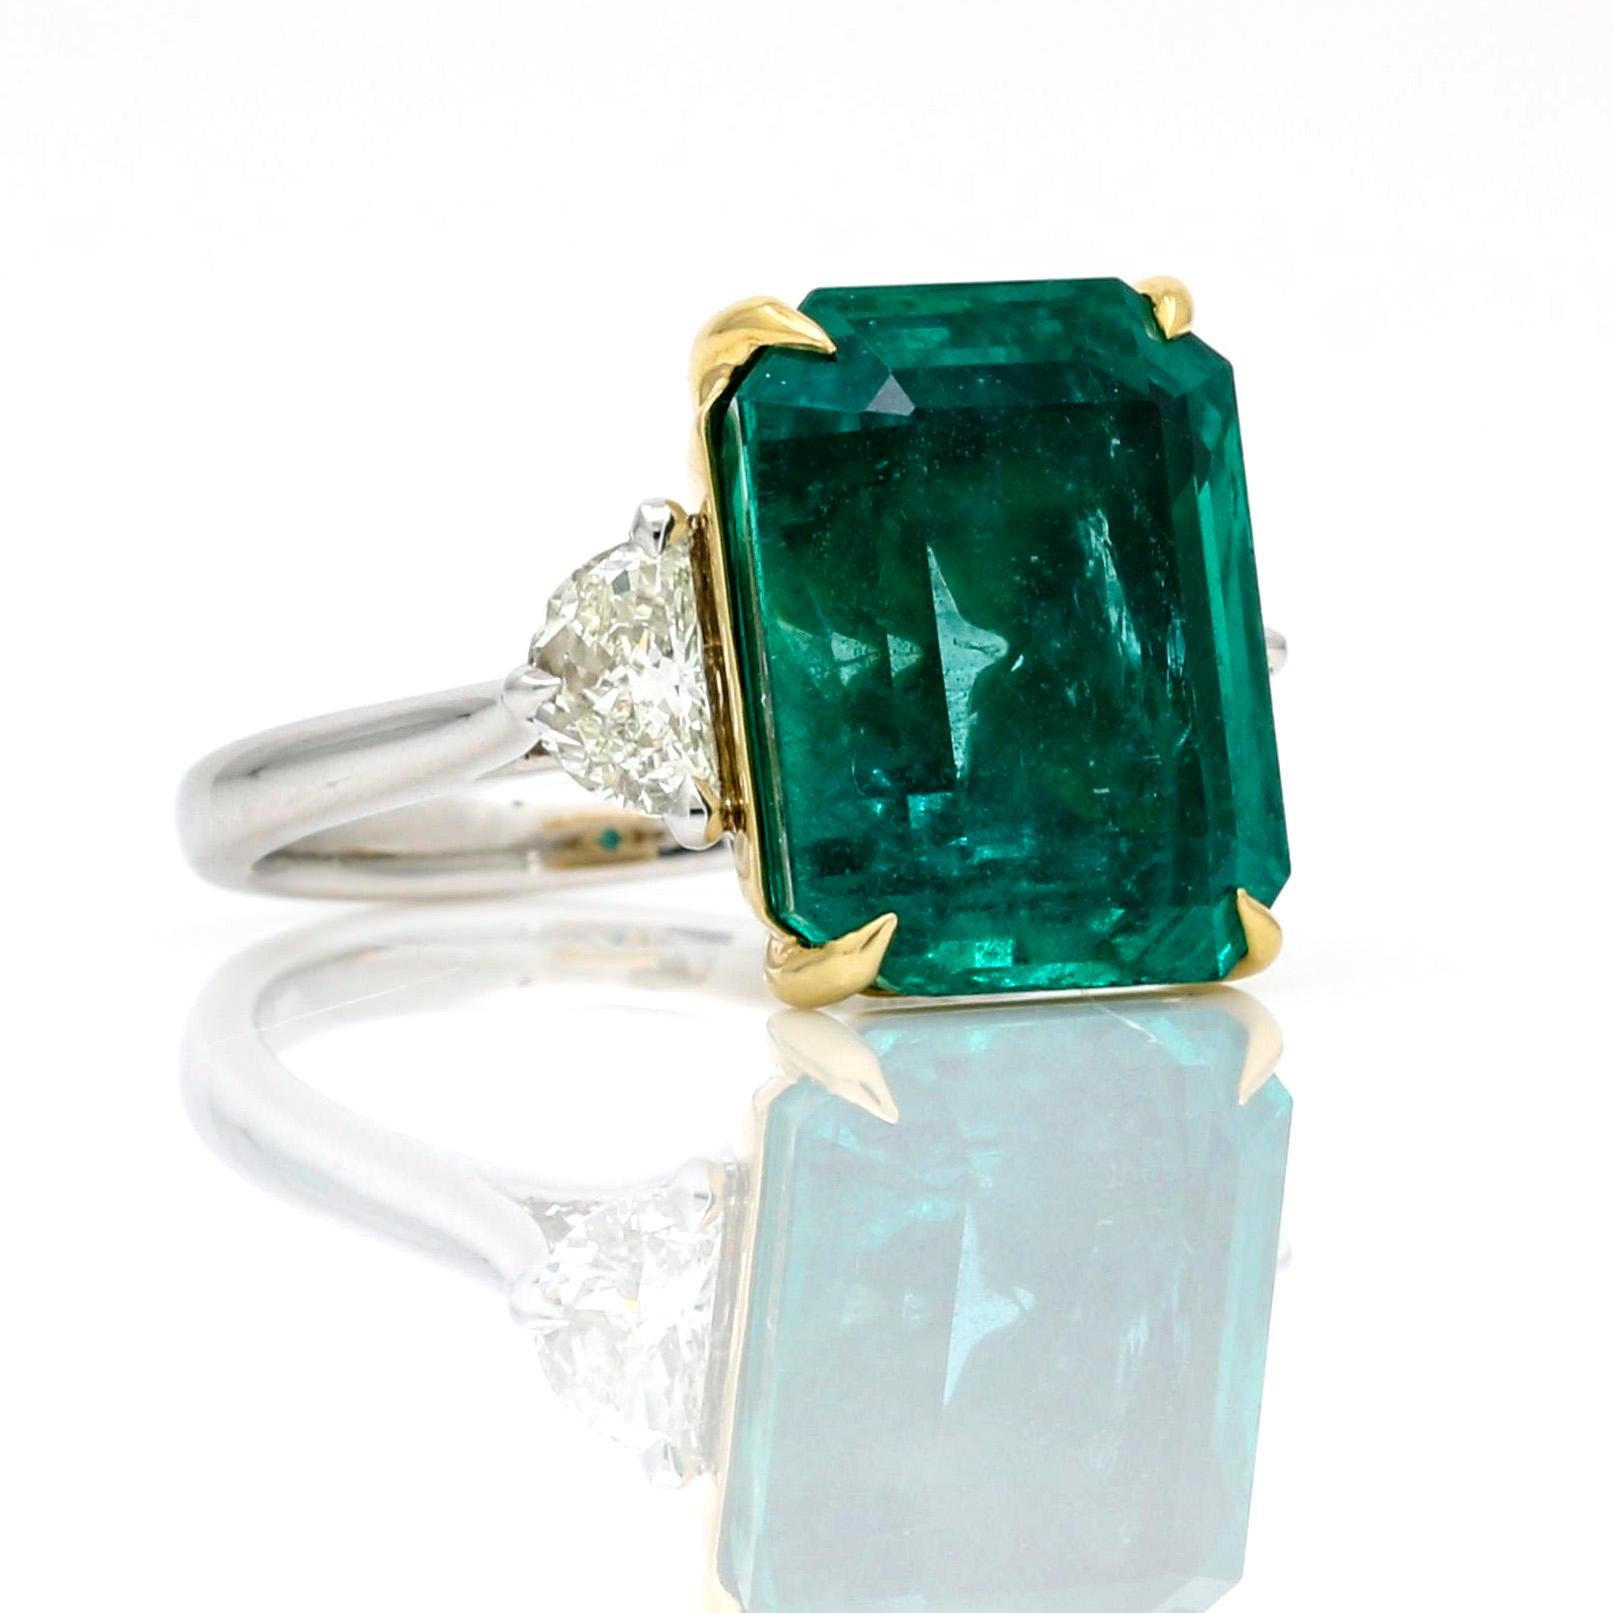 Contemporary 11.58 Carat Emerald Diamond Statement Ring in 18 Karat Yellow Gold and Platinum 